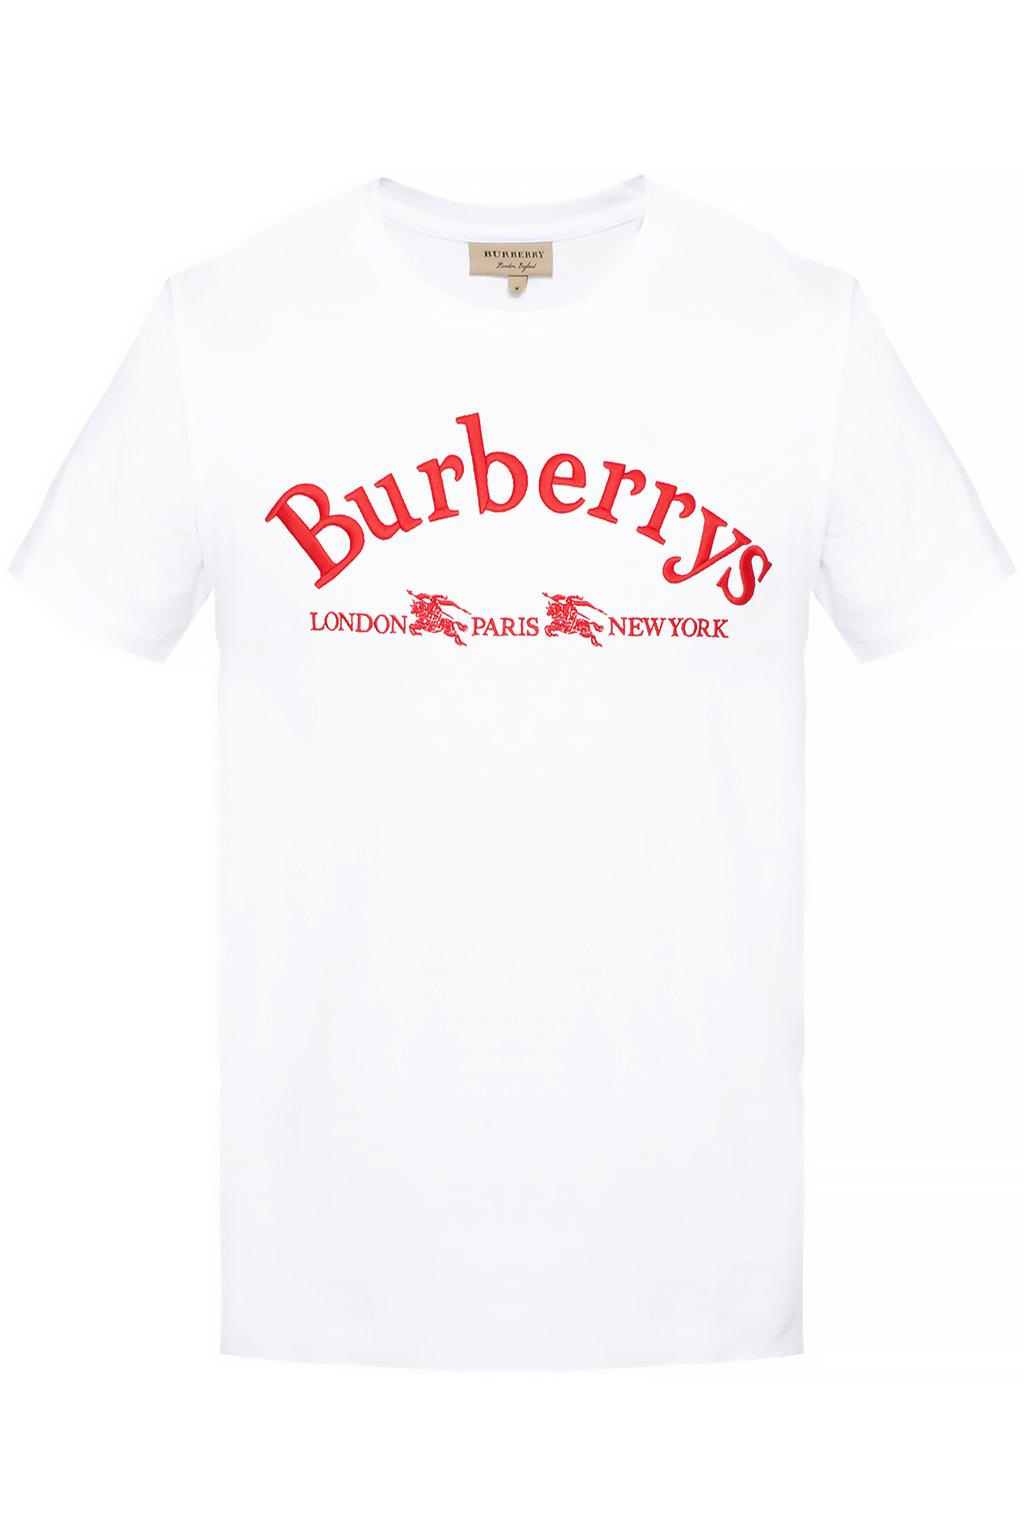 burberry t shirt red logo